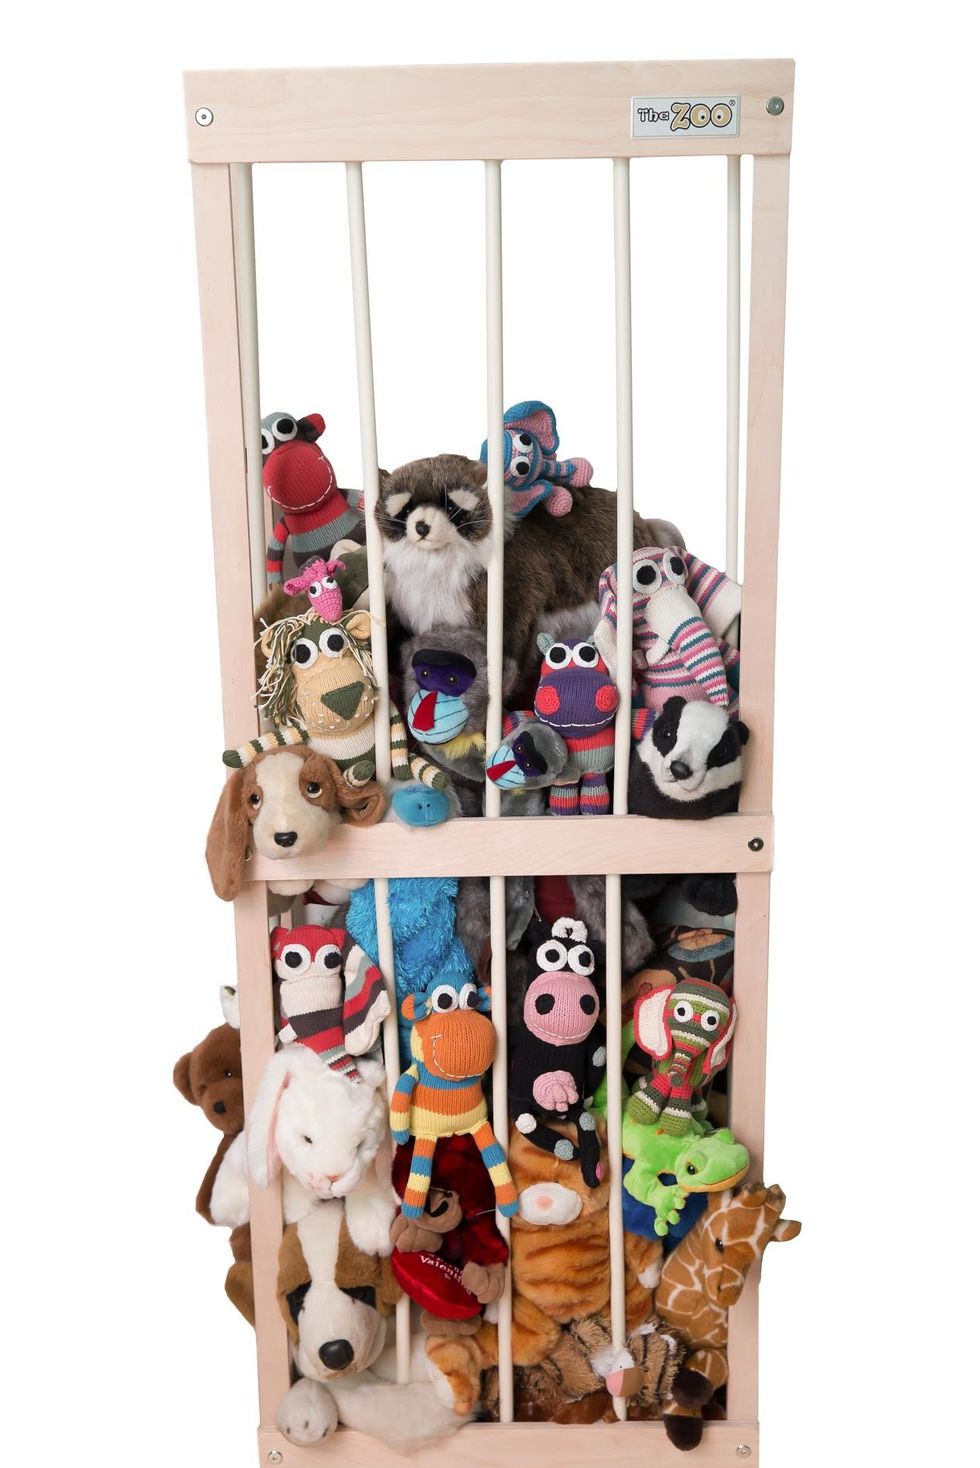 The Best Ideas for Stuffed Animal Storage - Atlanta Parent